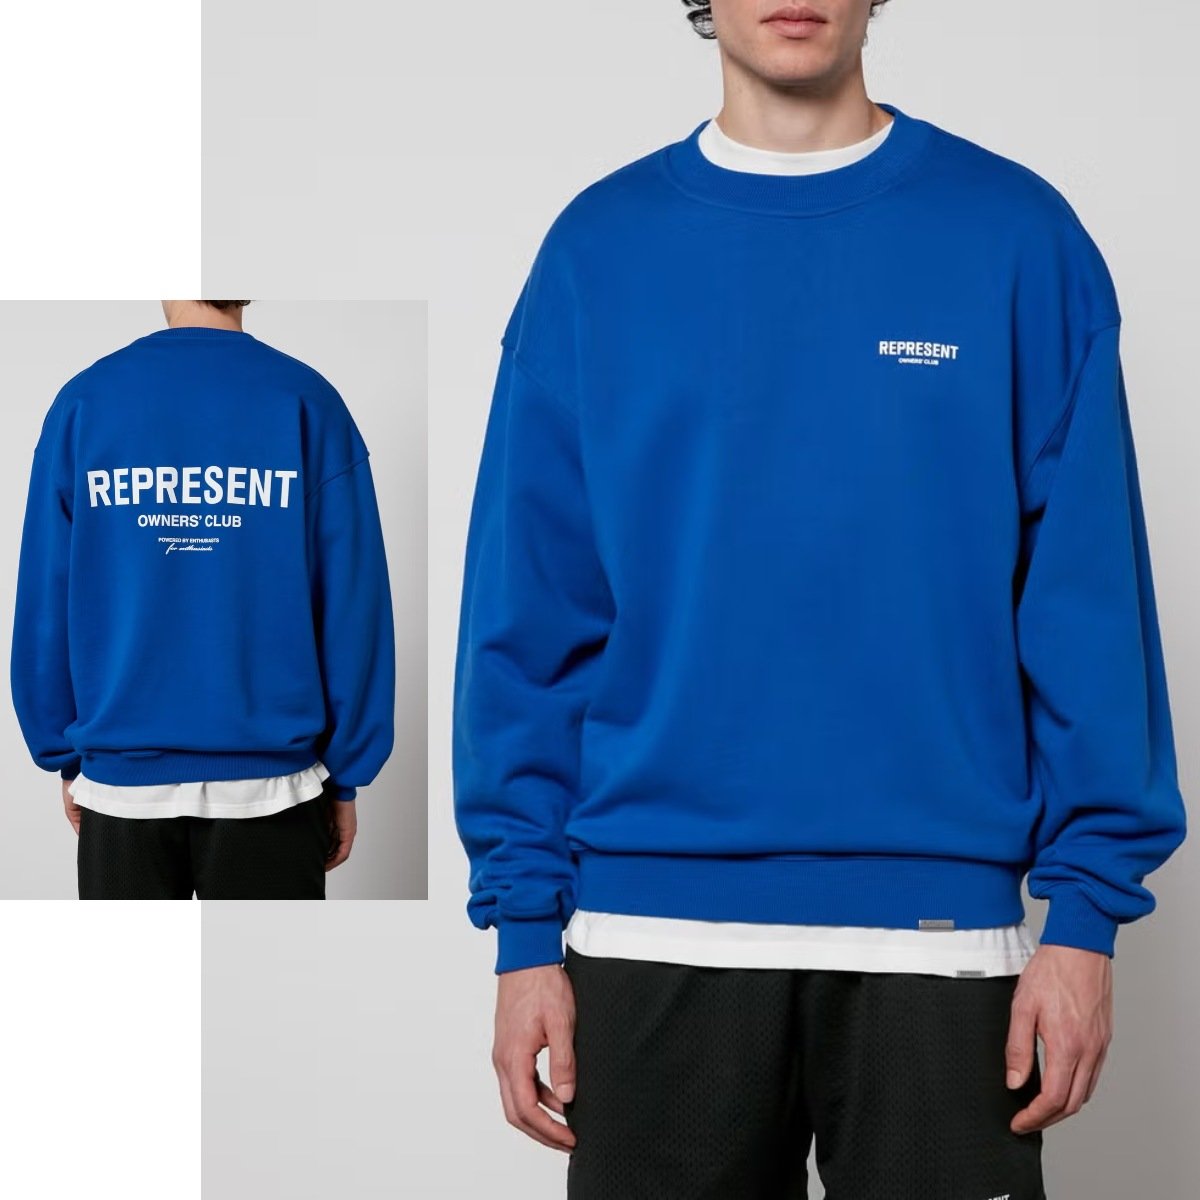 Represent Owners' Club Sweatshirt